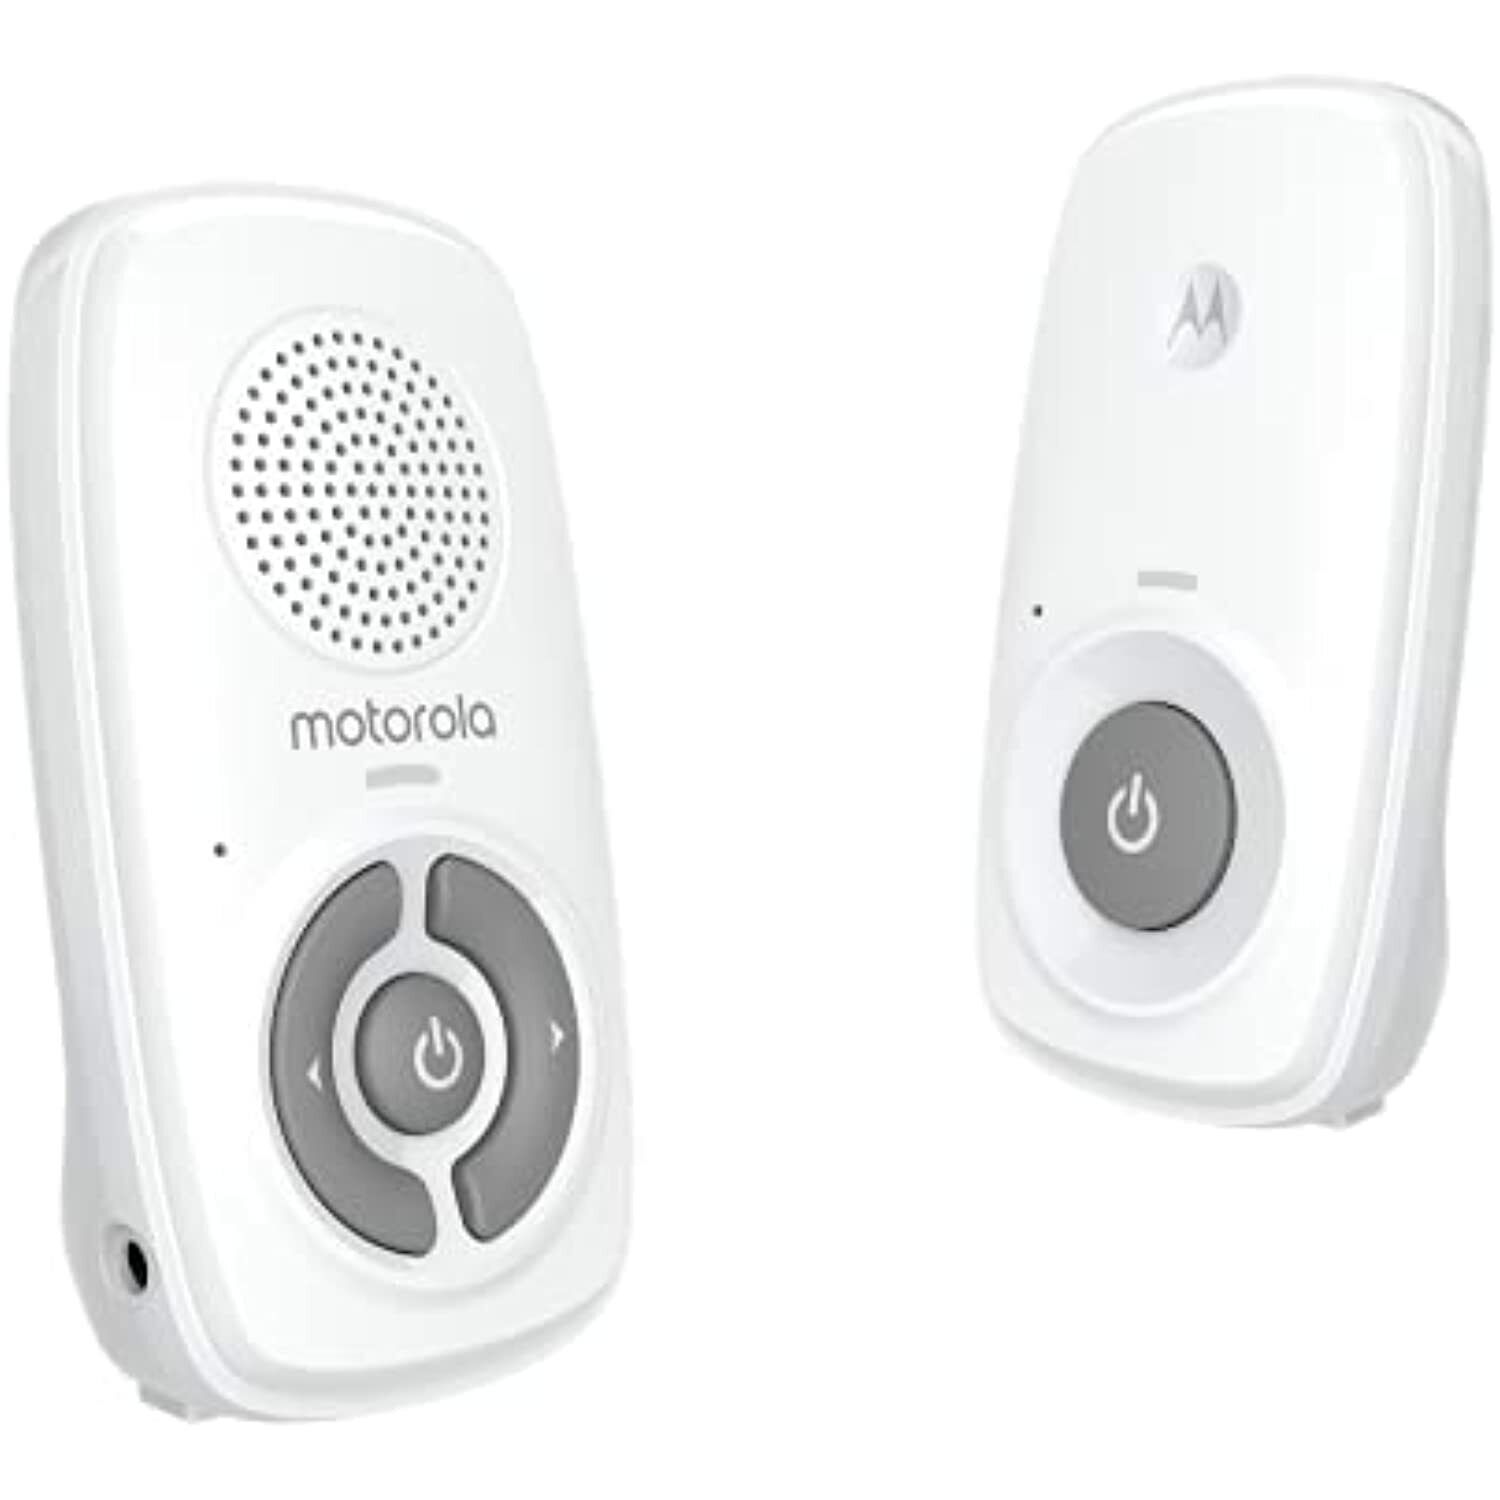 Motorola MBP-21 Baby Monitor - Audio